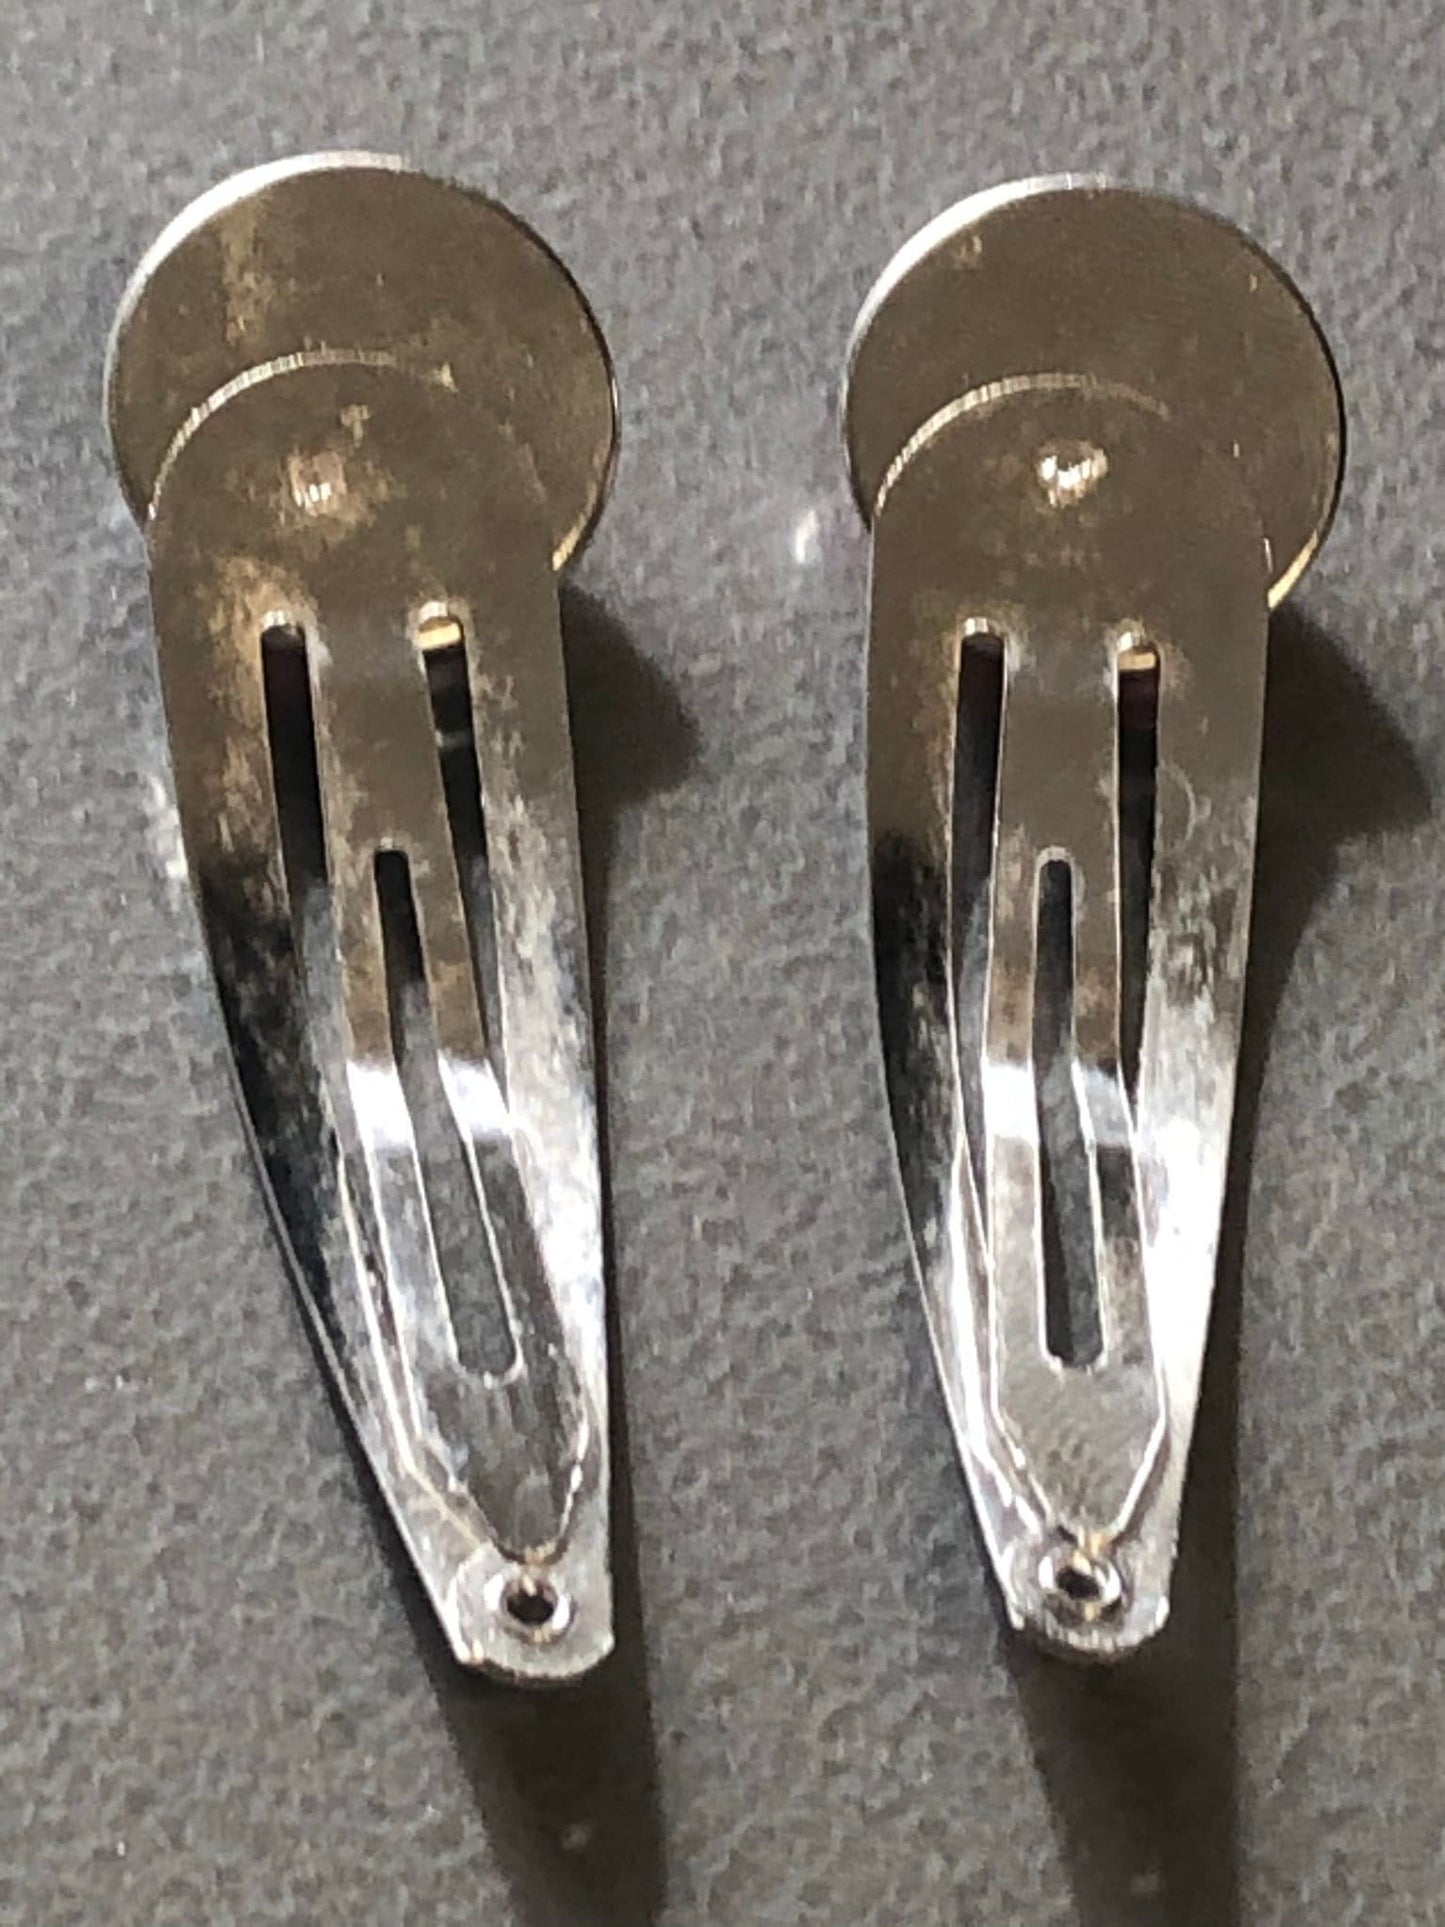 pair of Unicorn hair clips silver tone snap lock closure